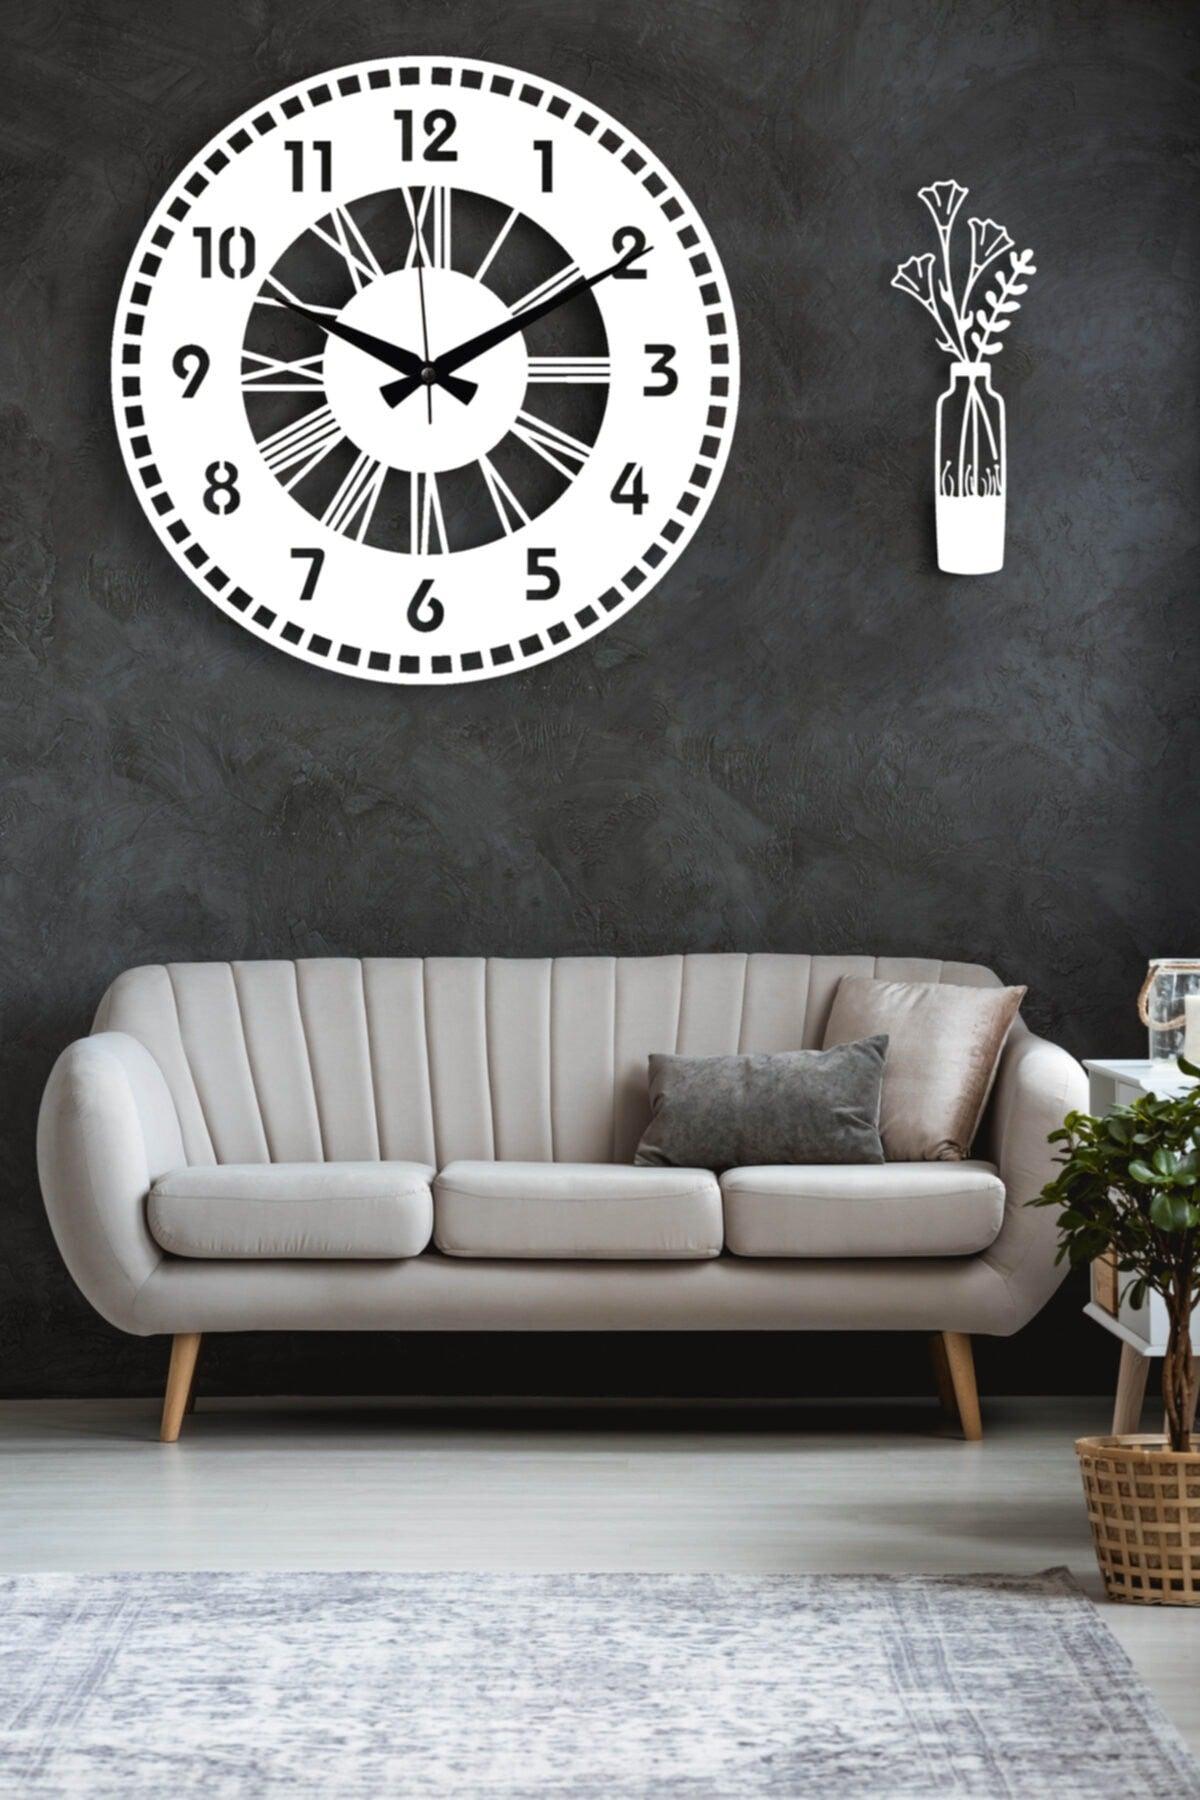 Decorative White Wall Clock + Vase Painting - Swordslife